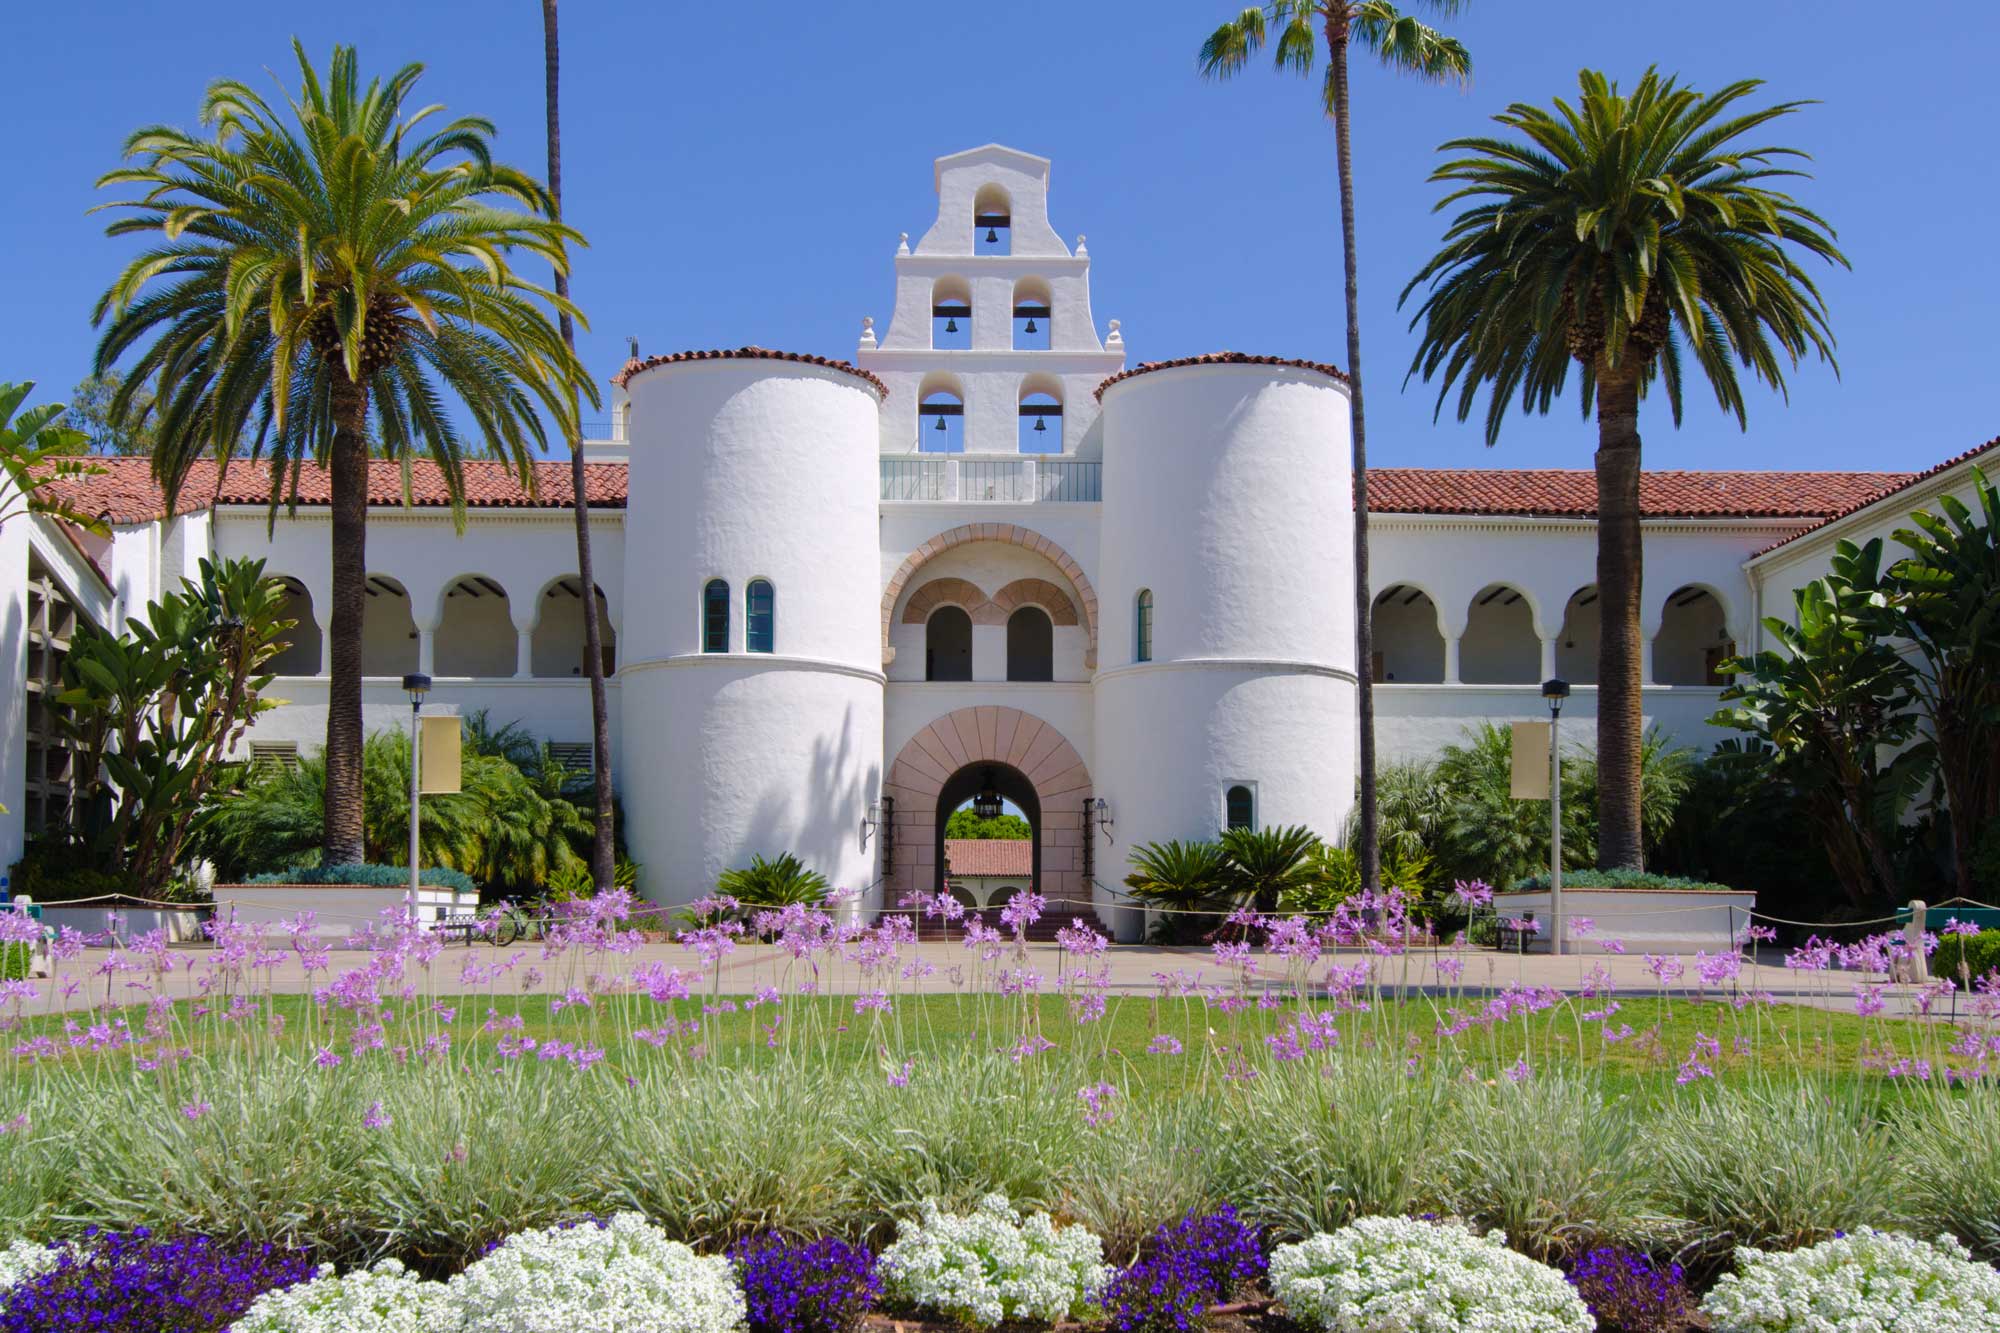 photo - Hepner Hall at San Diego State University